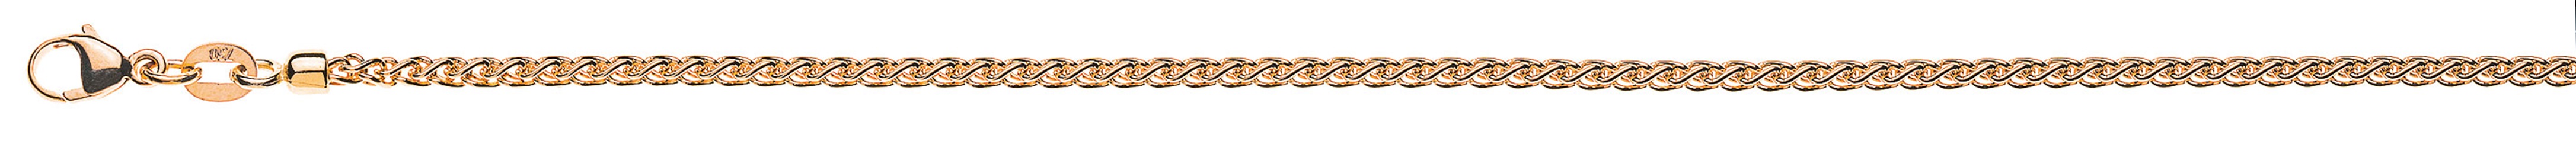 AURONOS Prestige Collier chaîne en or rose 18K 60cm 2.15mm